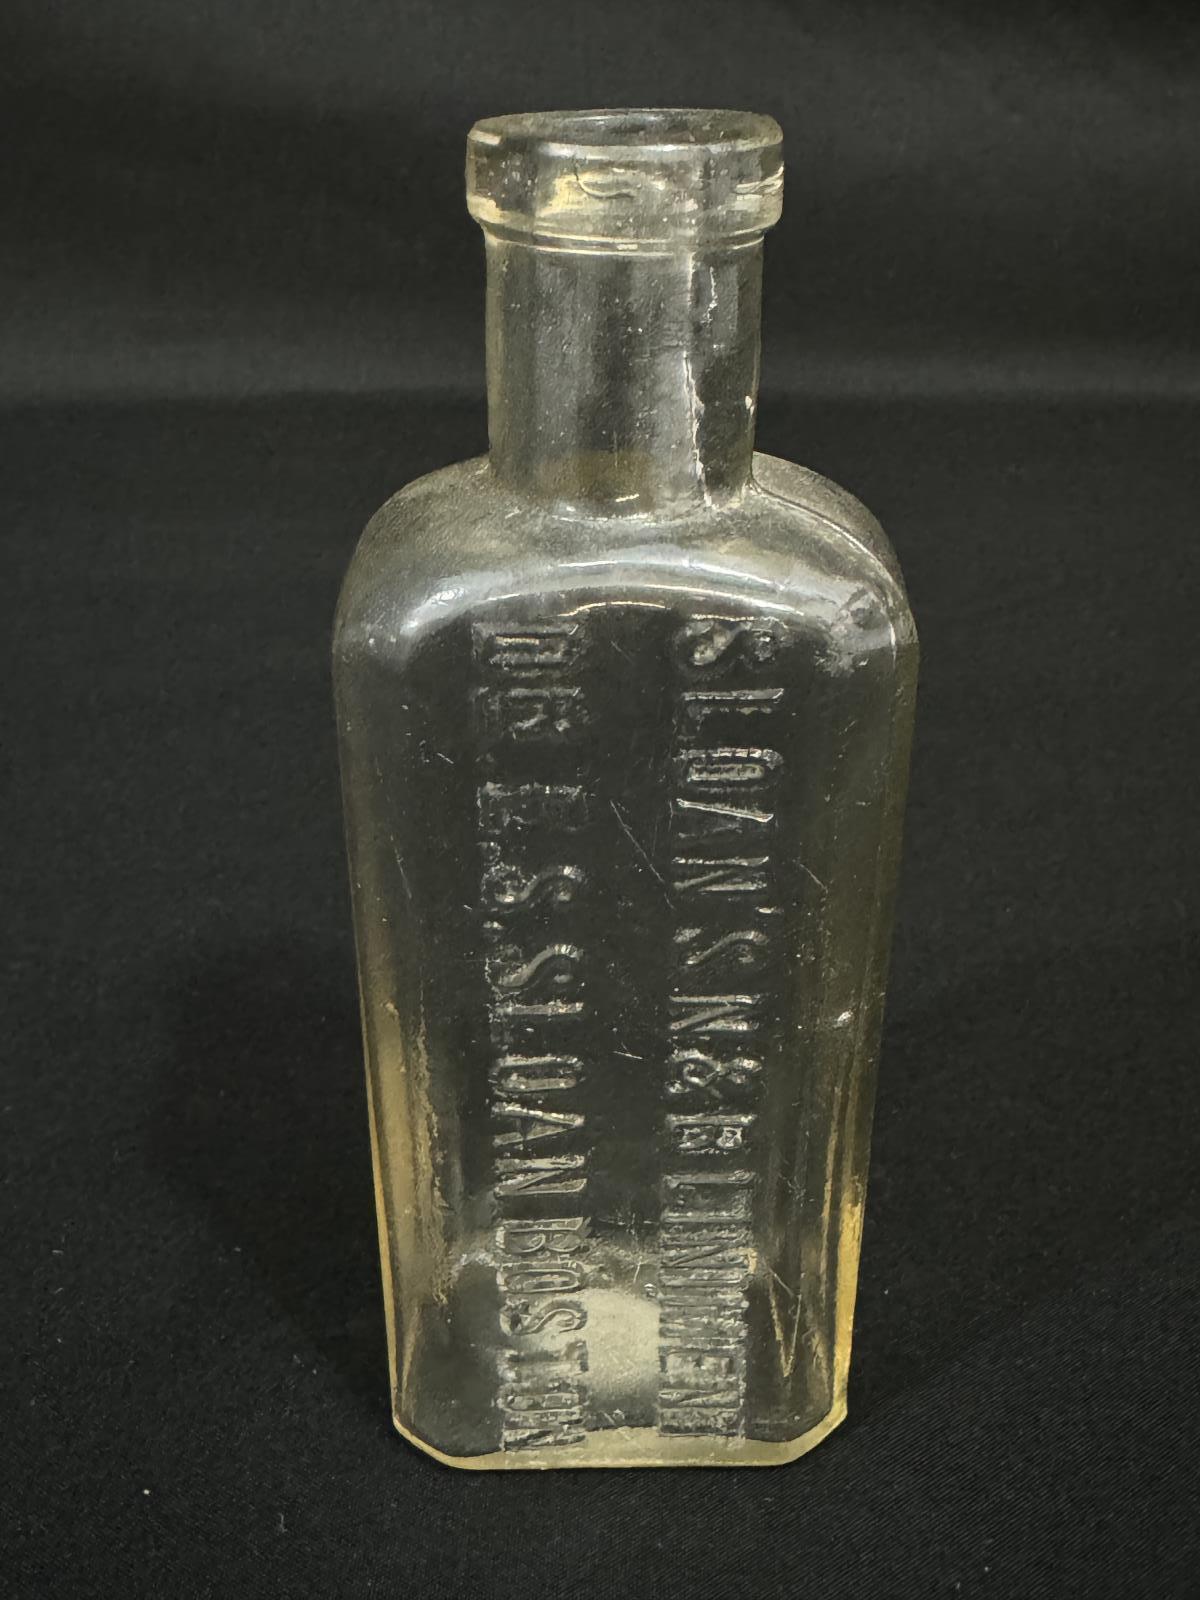 Vintage Sloan's N & B Liniment Glass Bottle